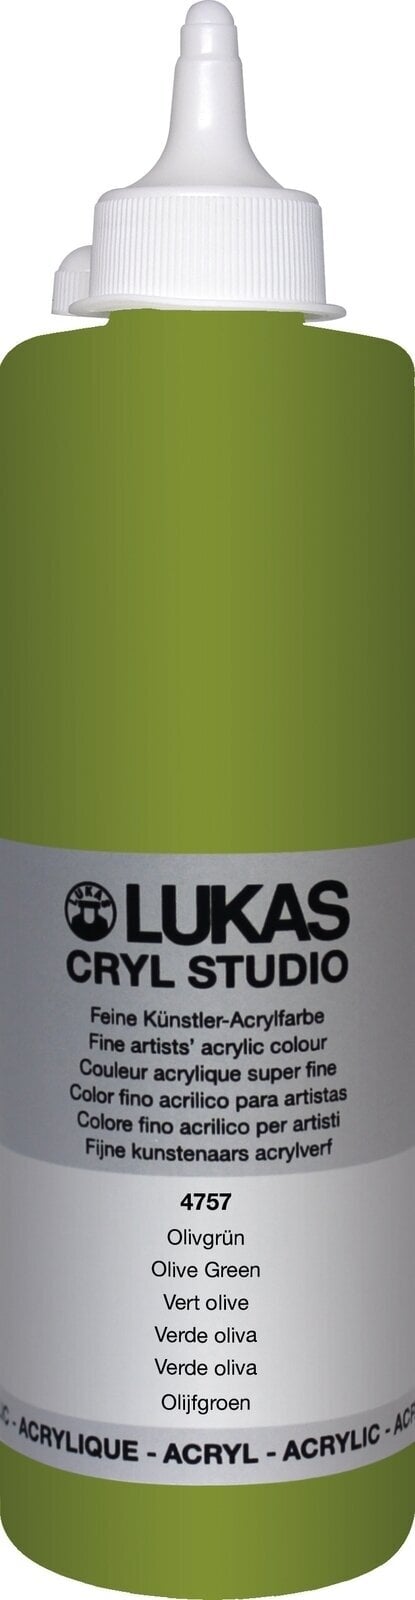 Acrylfarbe Lukas Cryl Studio Acrylic Paint Plastic Bottle Acrylfarbe Olive Green 500 ml 1 Stck